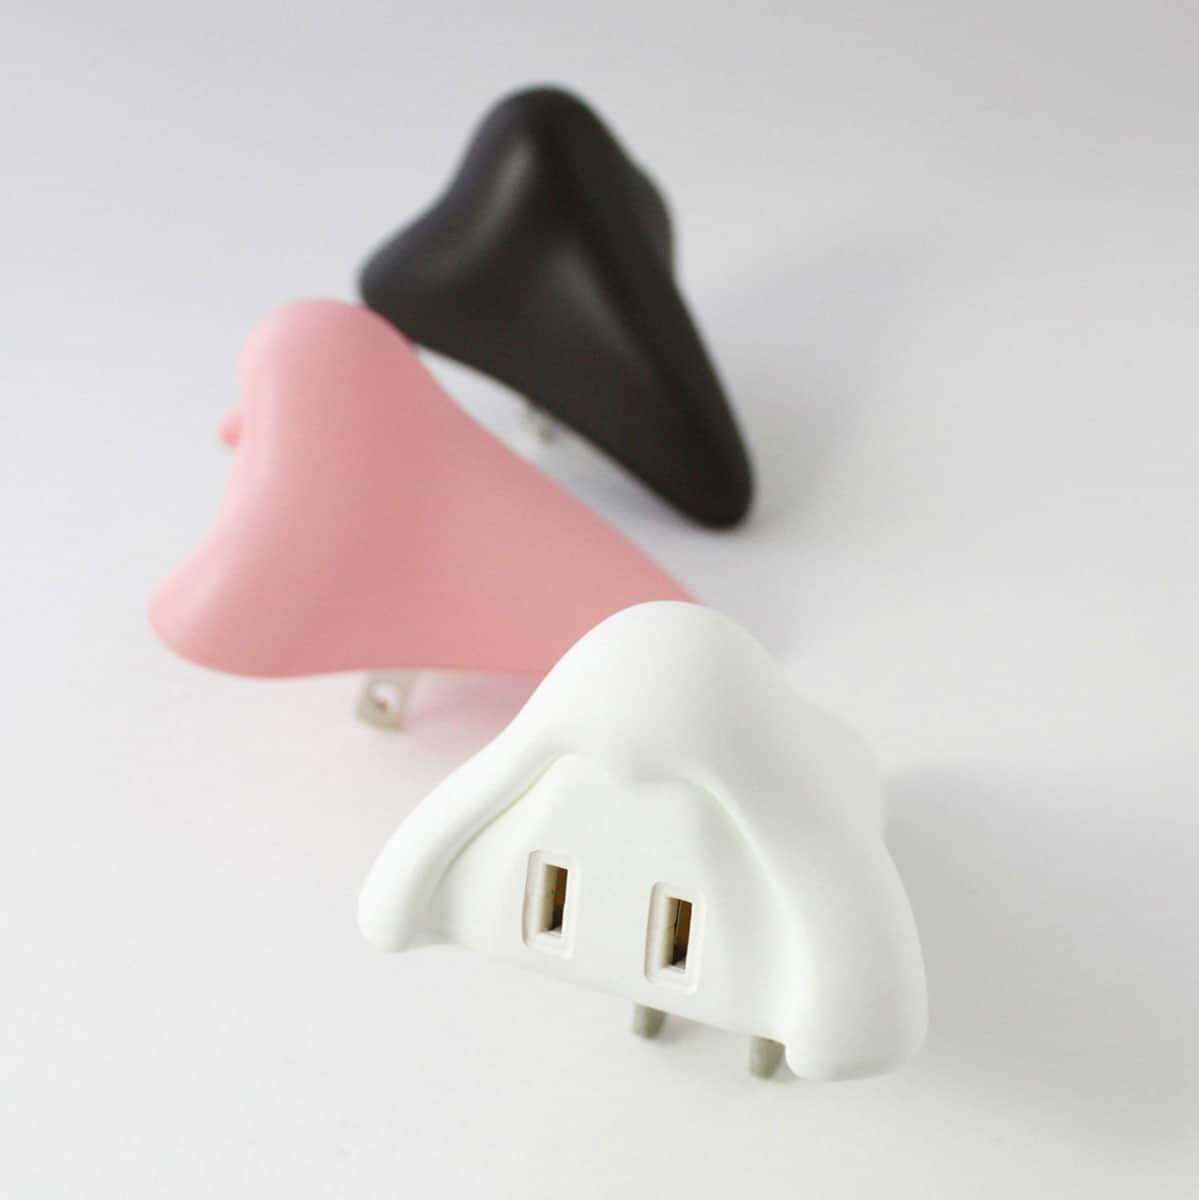 Hanaga-Tap-Nose-Power-Outlet-Cool-Gadget-Plug